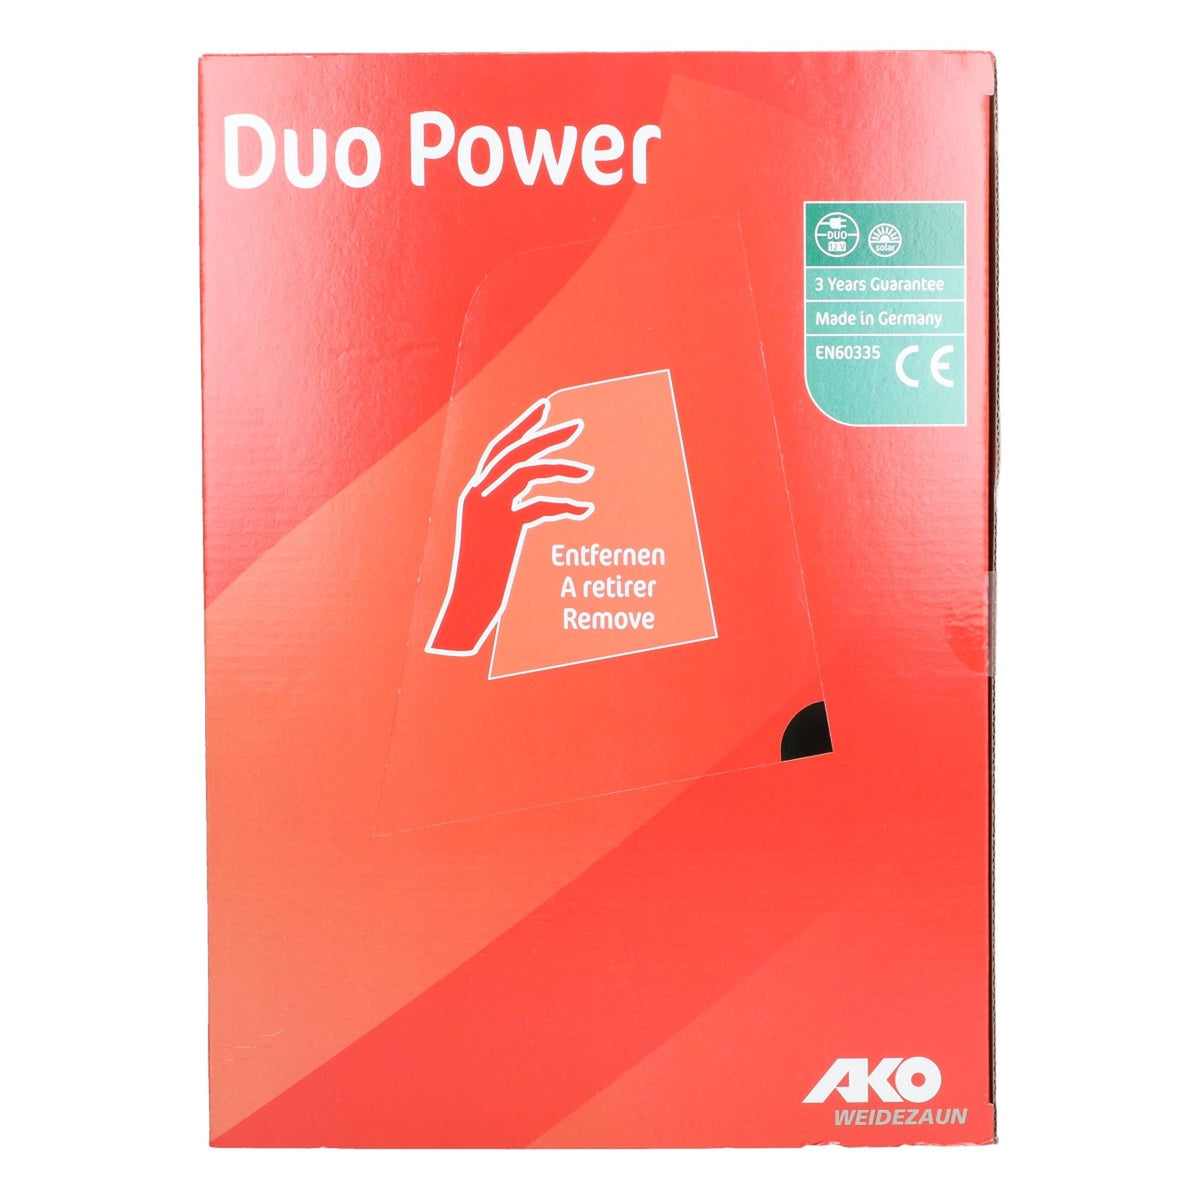 Ako Weidezaungeräte Duo Power X4000 3,0 Joule